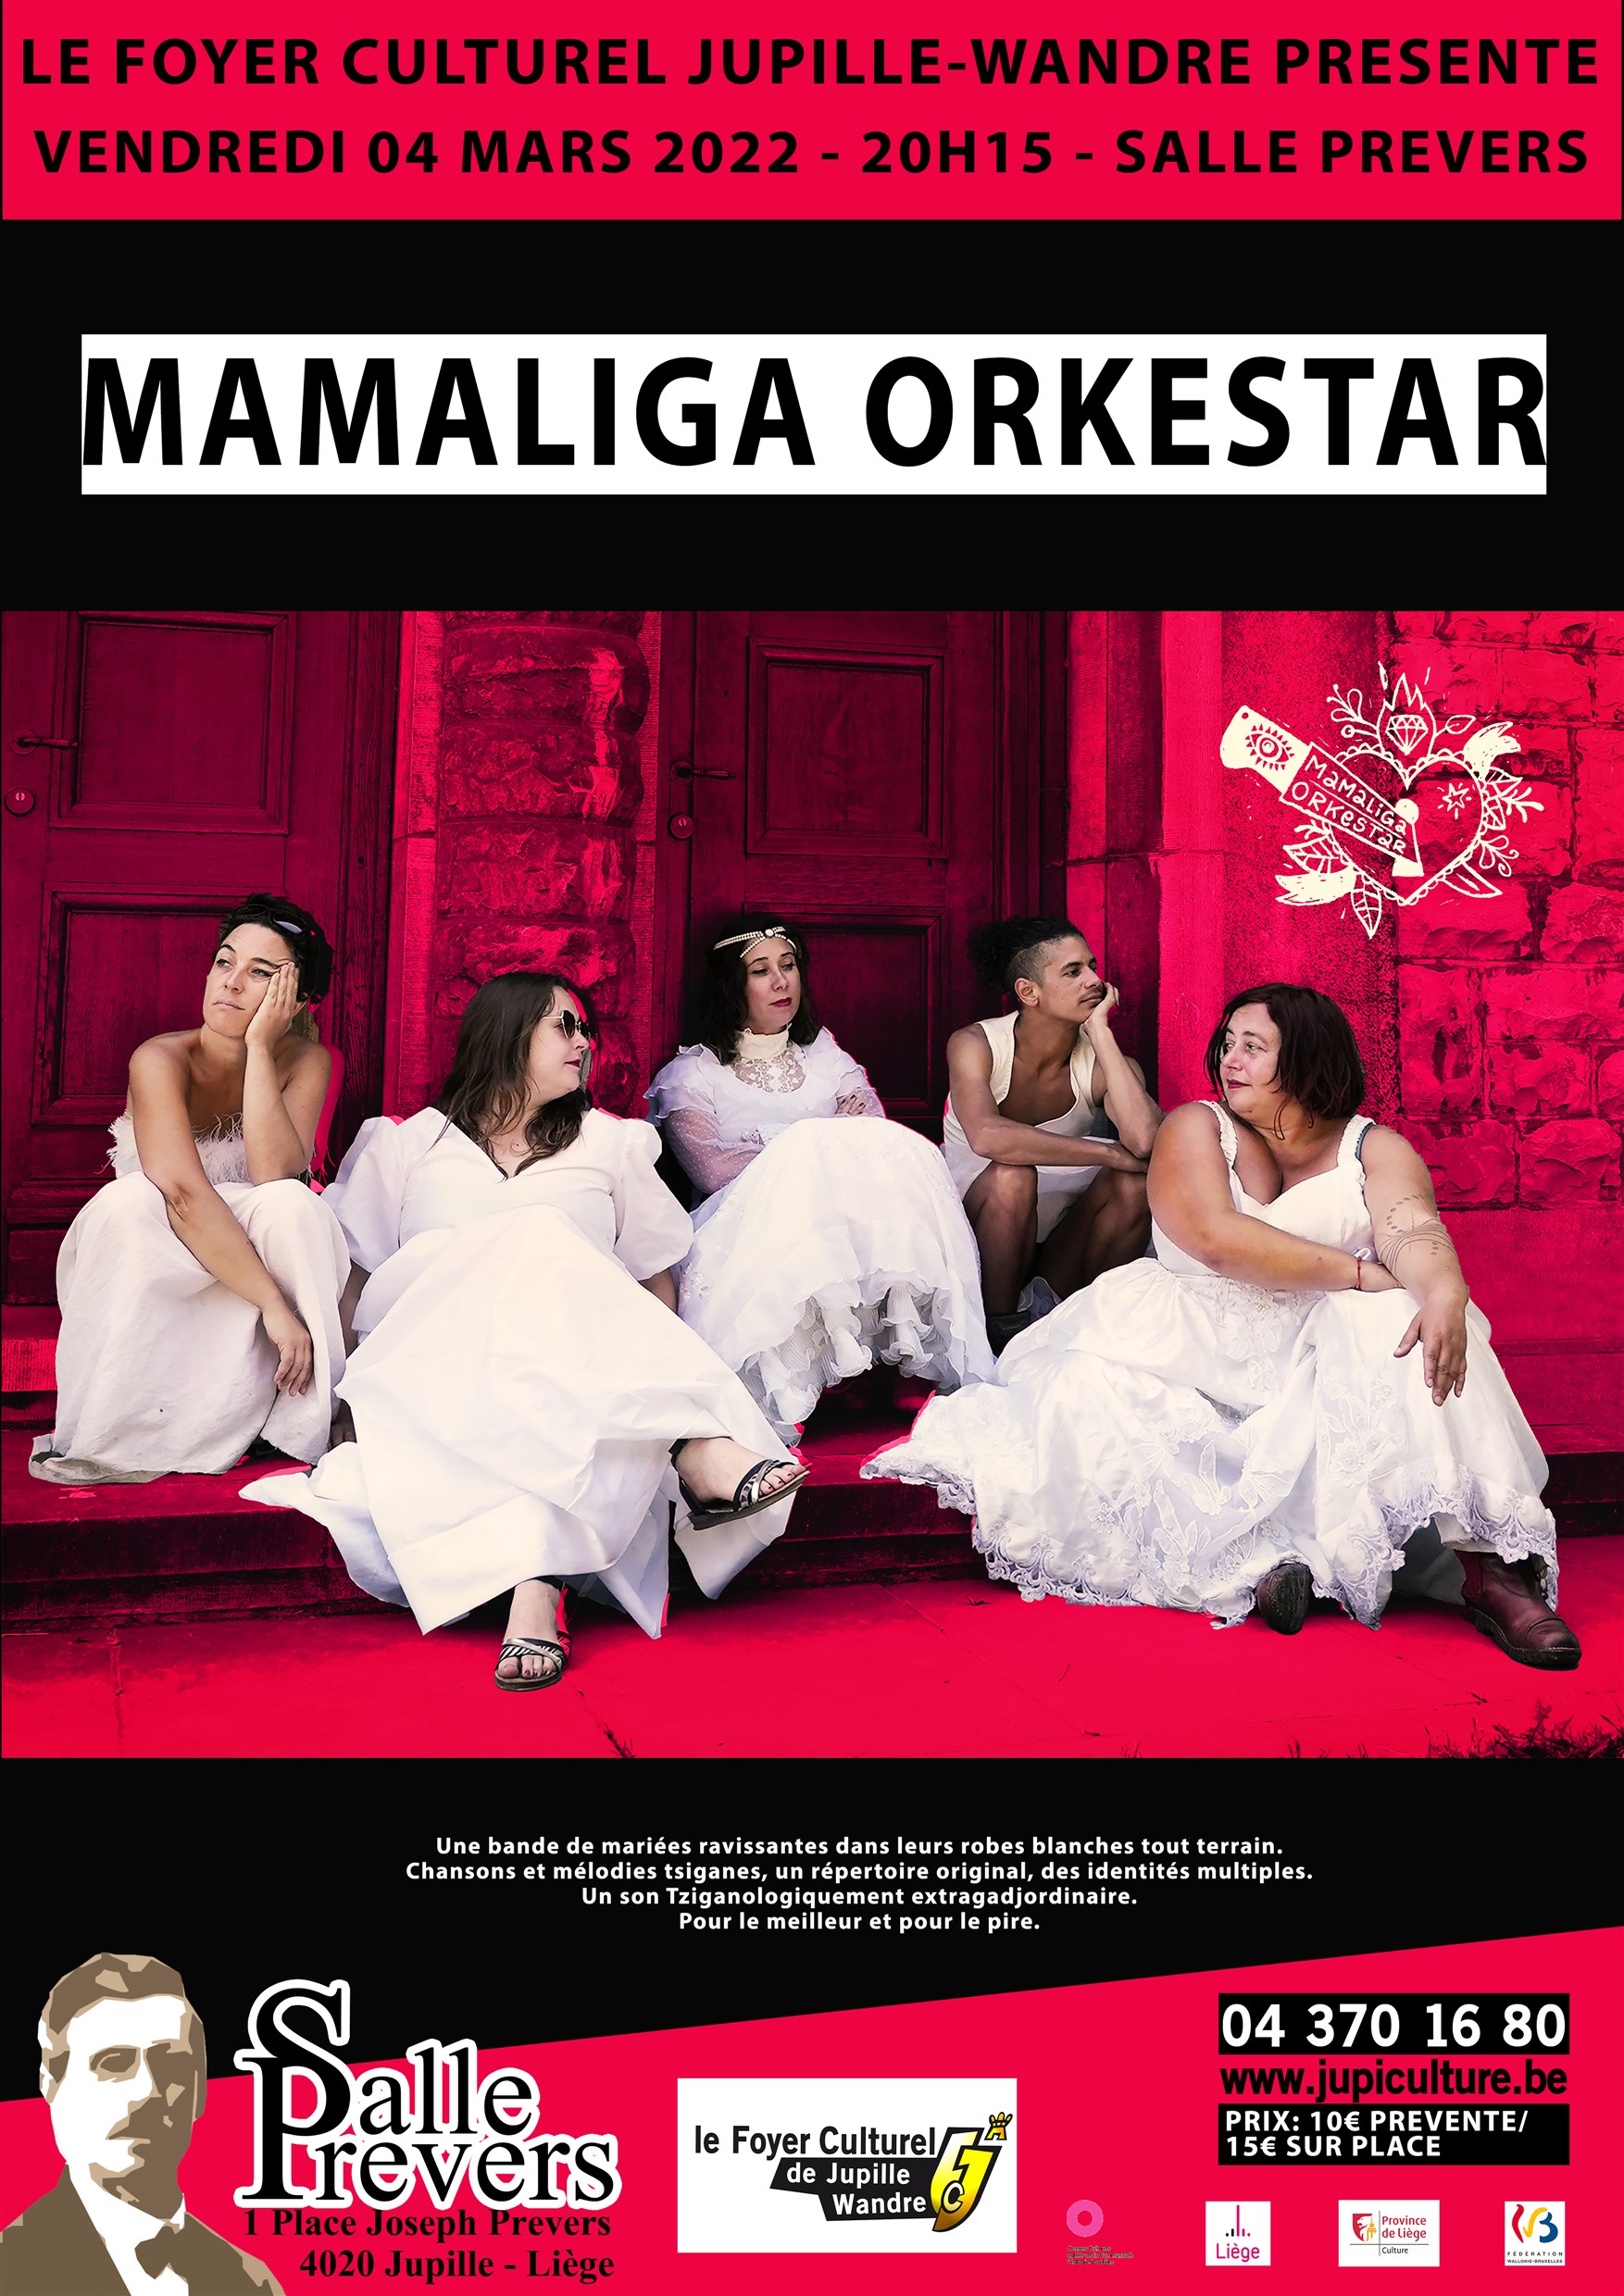 Mamaliga Orkestar au Foyer culturel de Jupille-Wandre